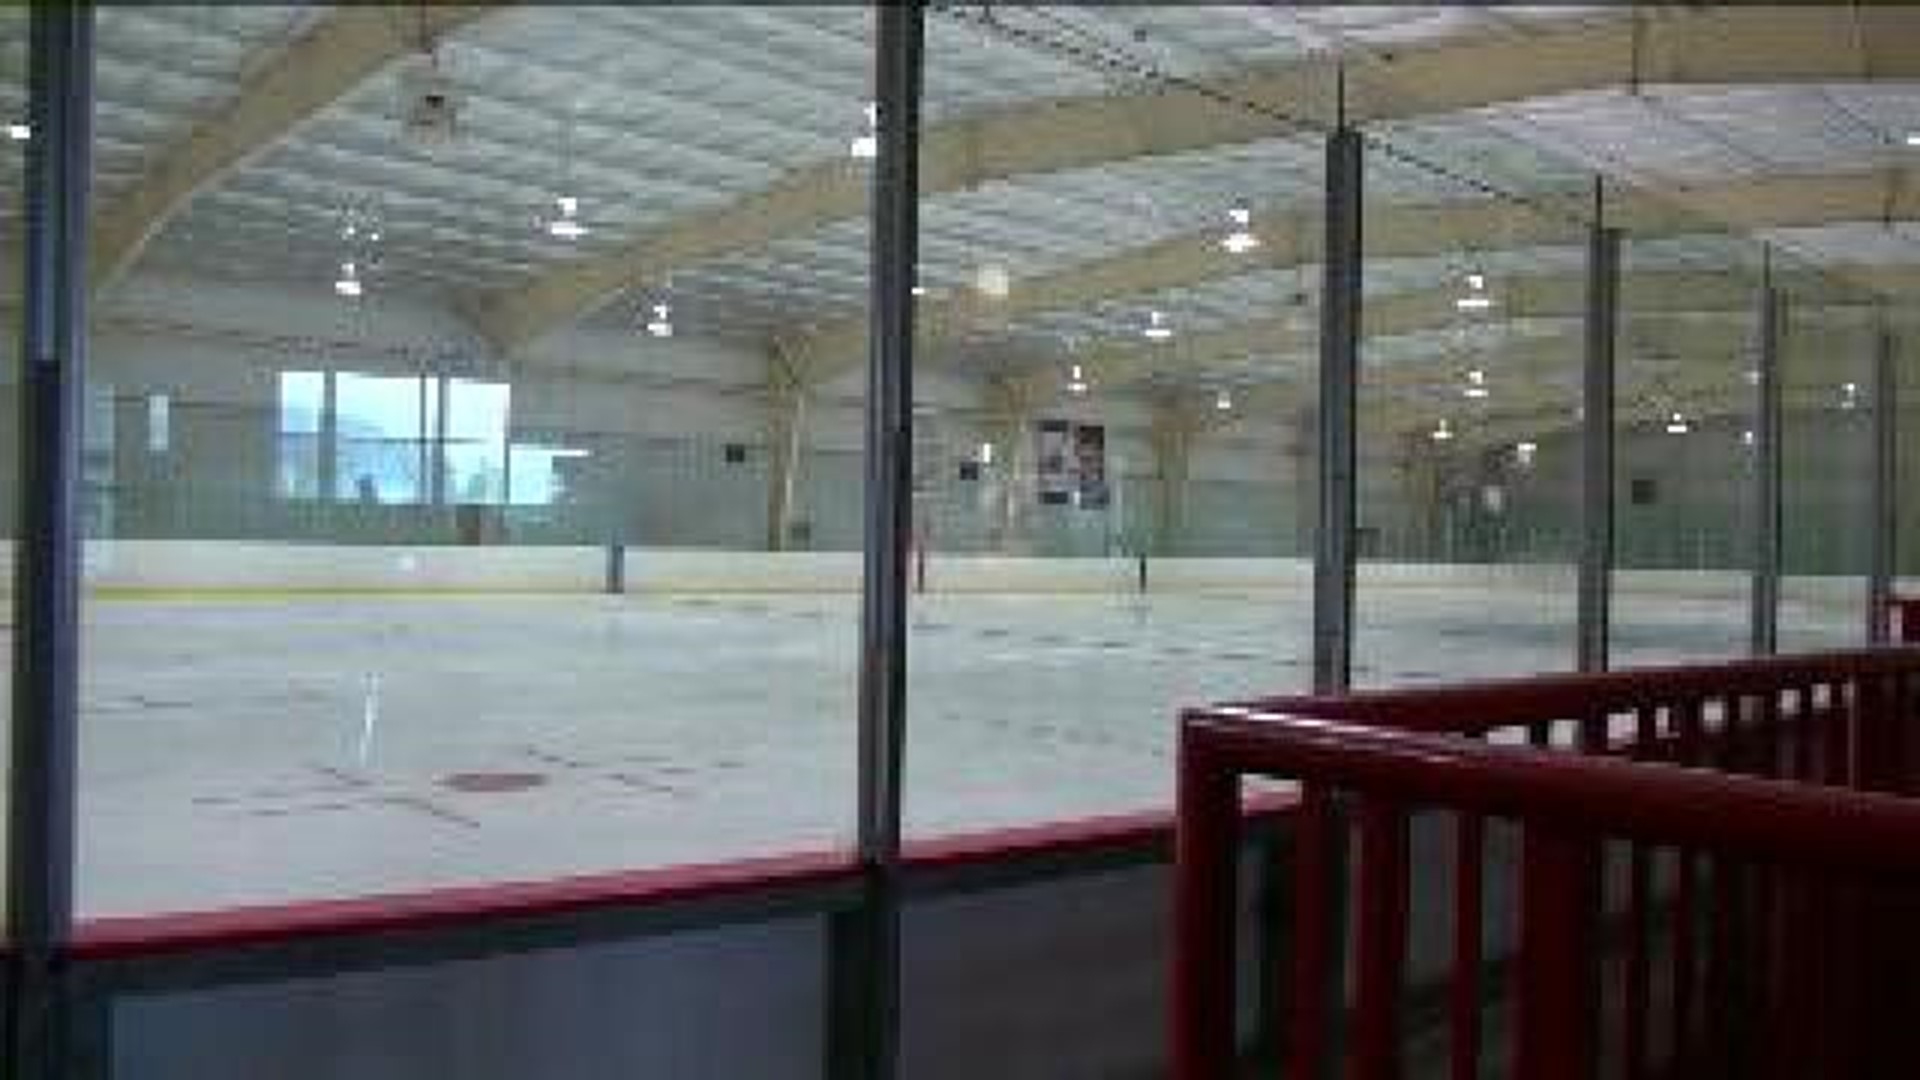 Ice Rink Opens for Season Despite Mild Temperatures